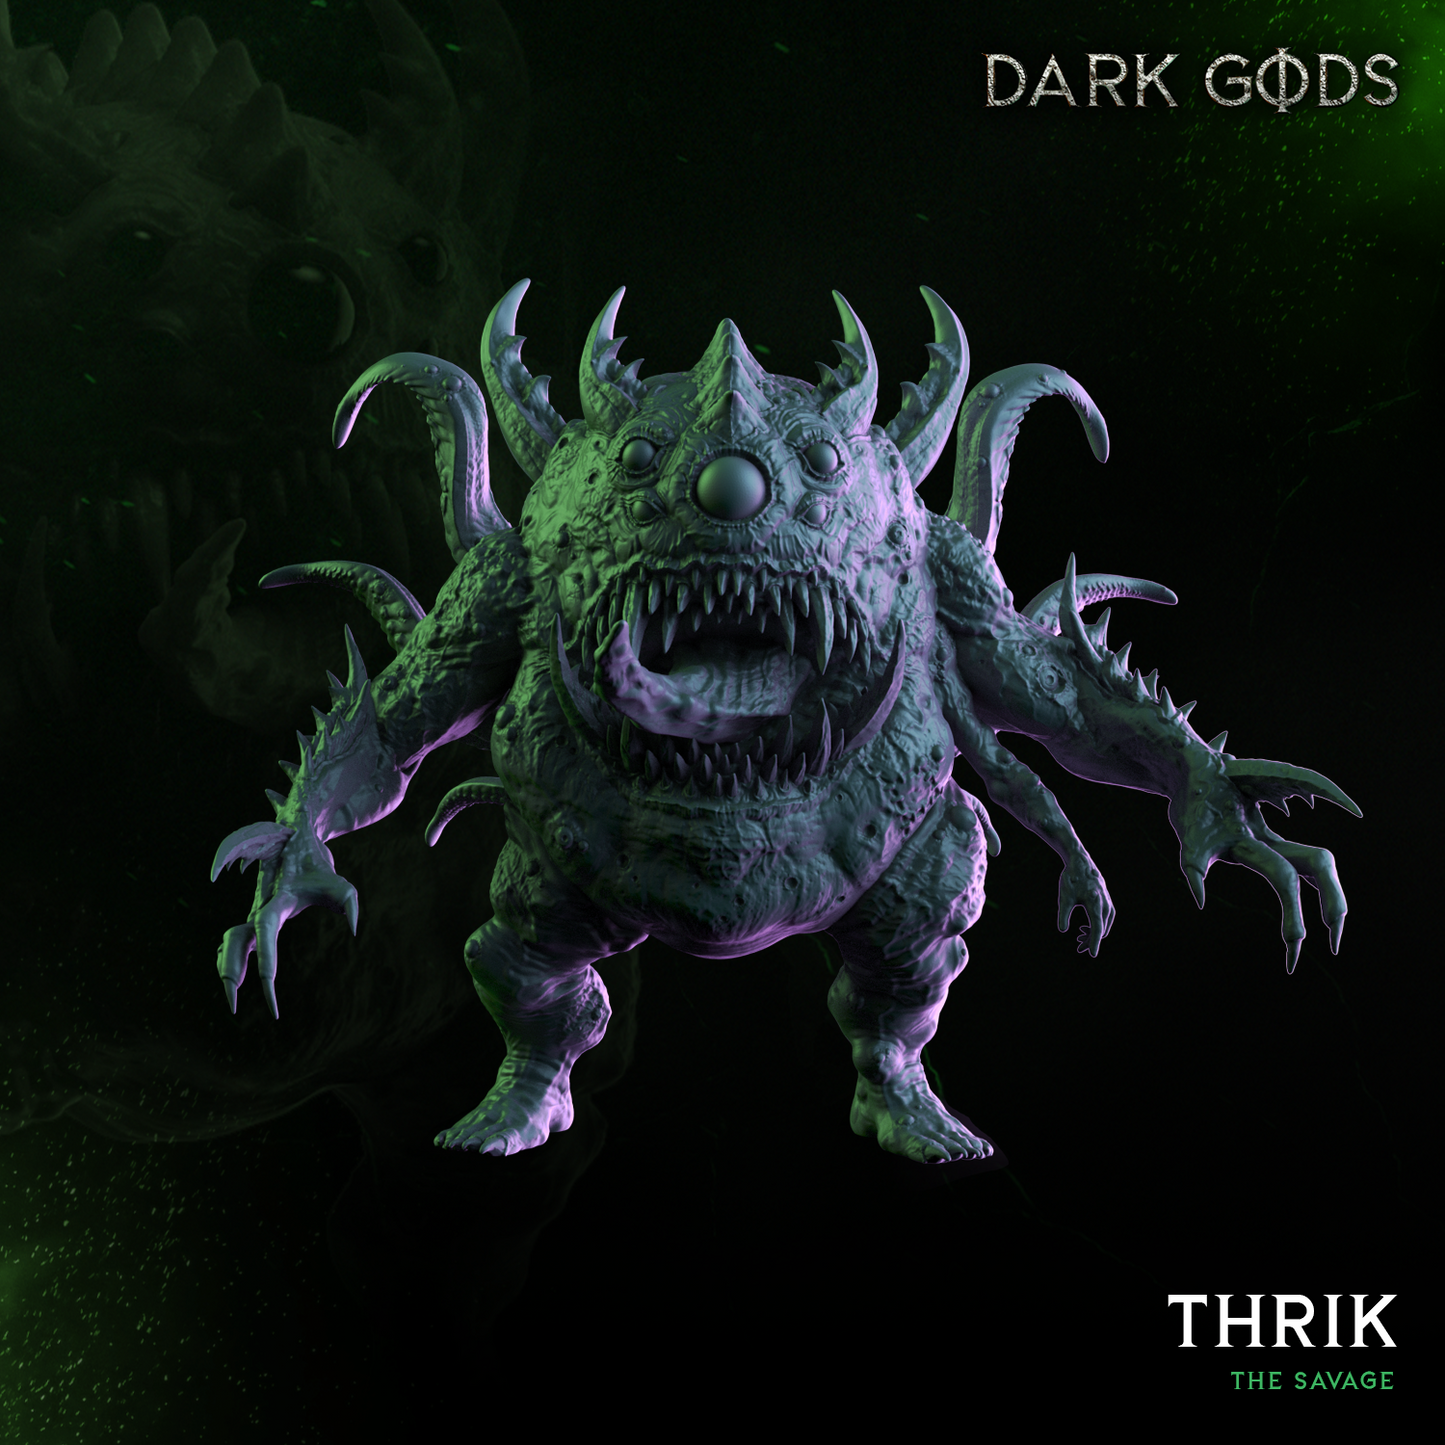 Thrick, the Abomination